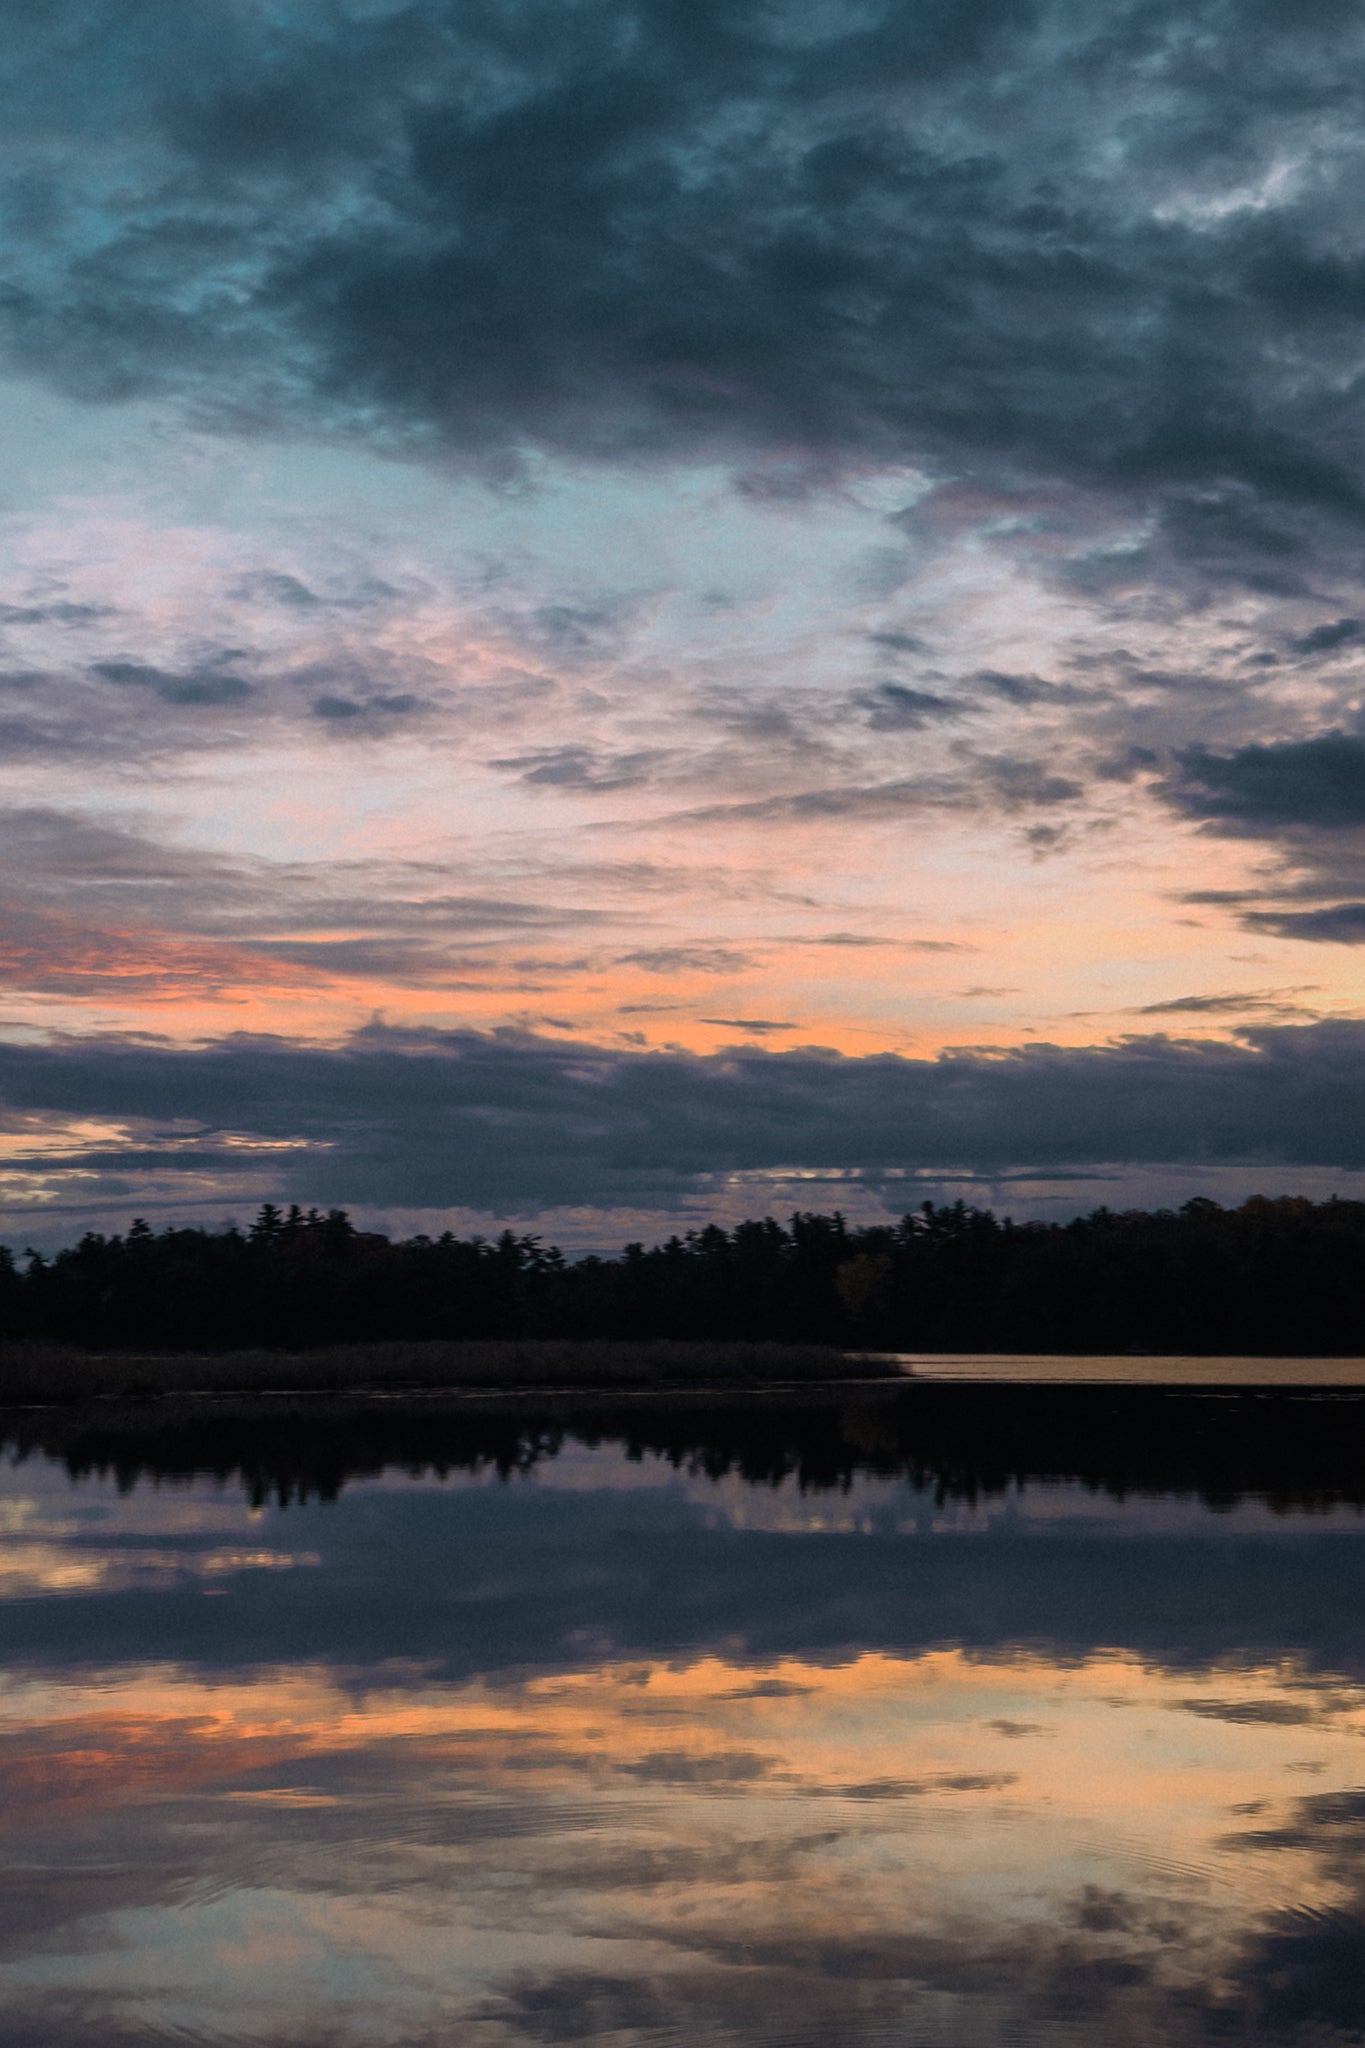 Photographic Print: "Sunrise Over Loon Lake"